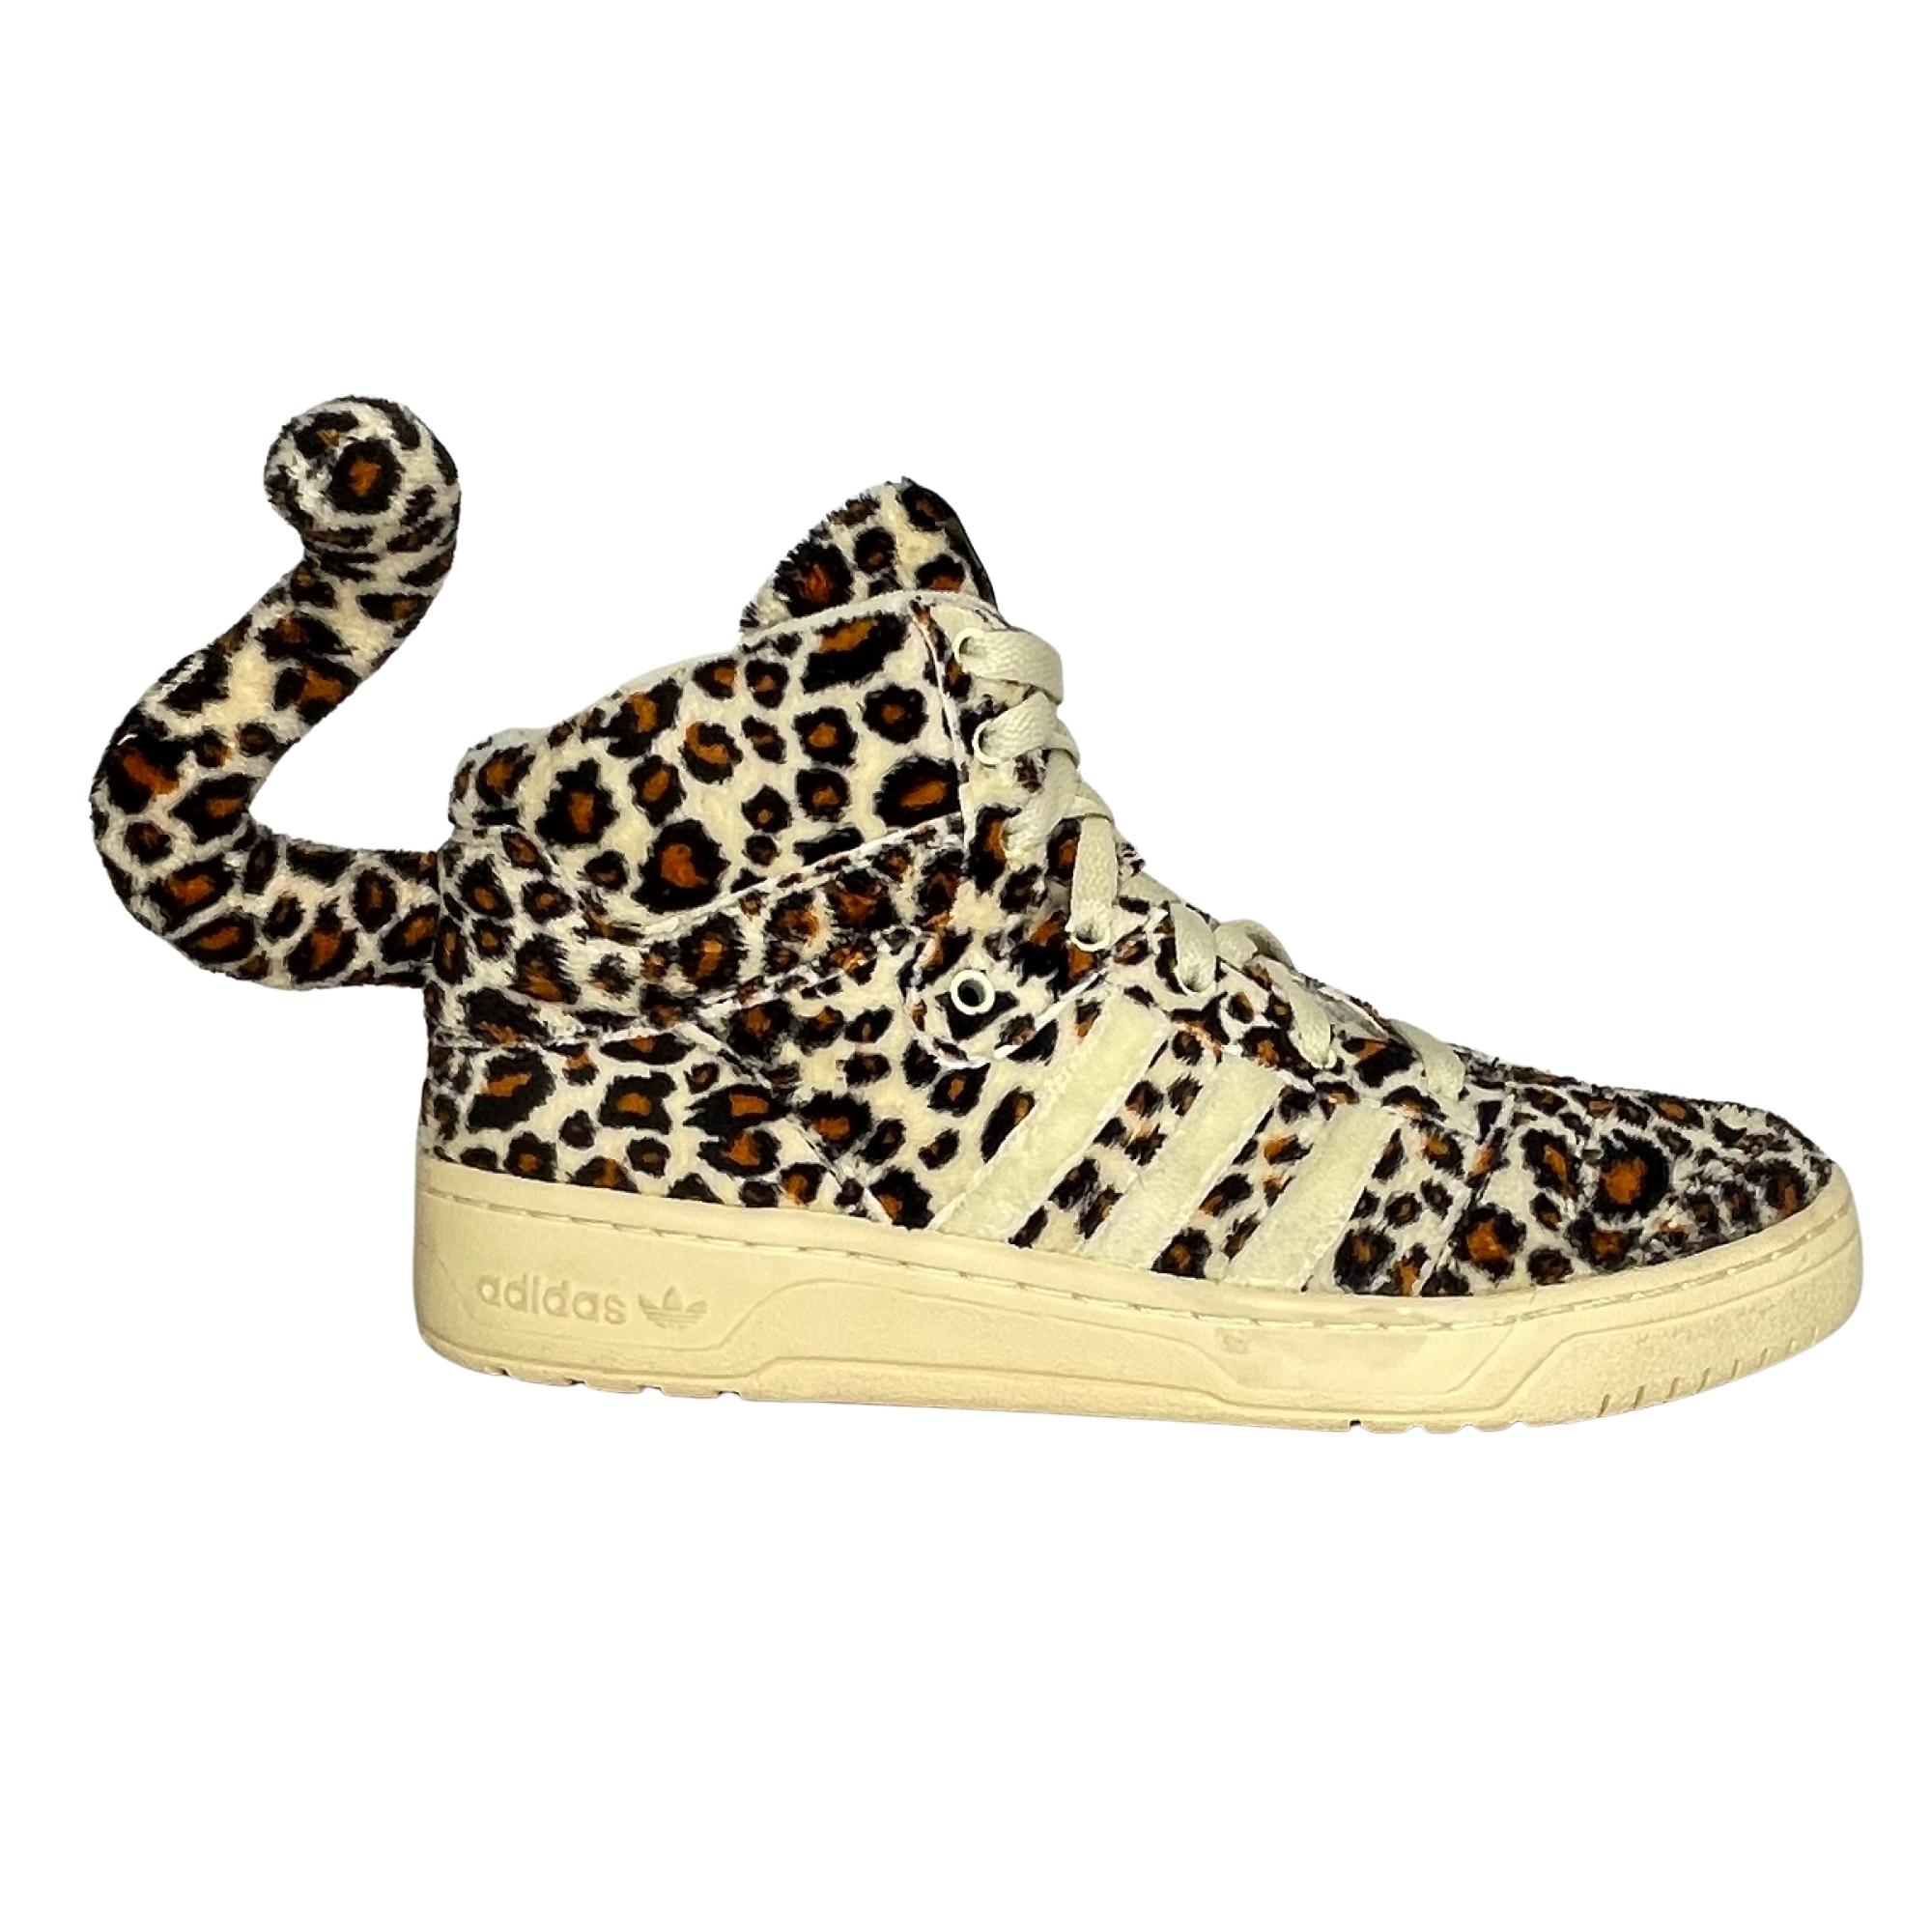 Adidas X Jeremy Scott Leopard Tail Sneaker 2012 (8.5 US)